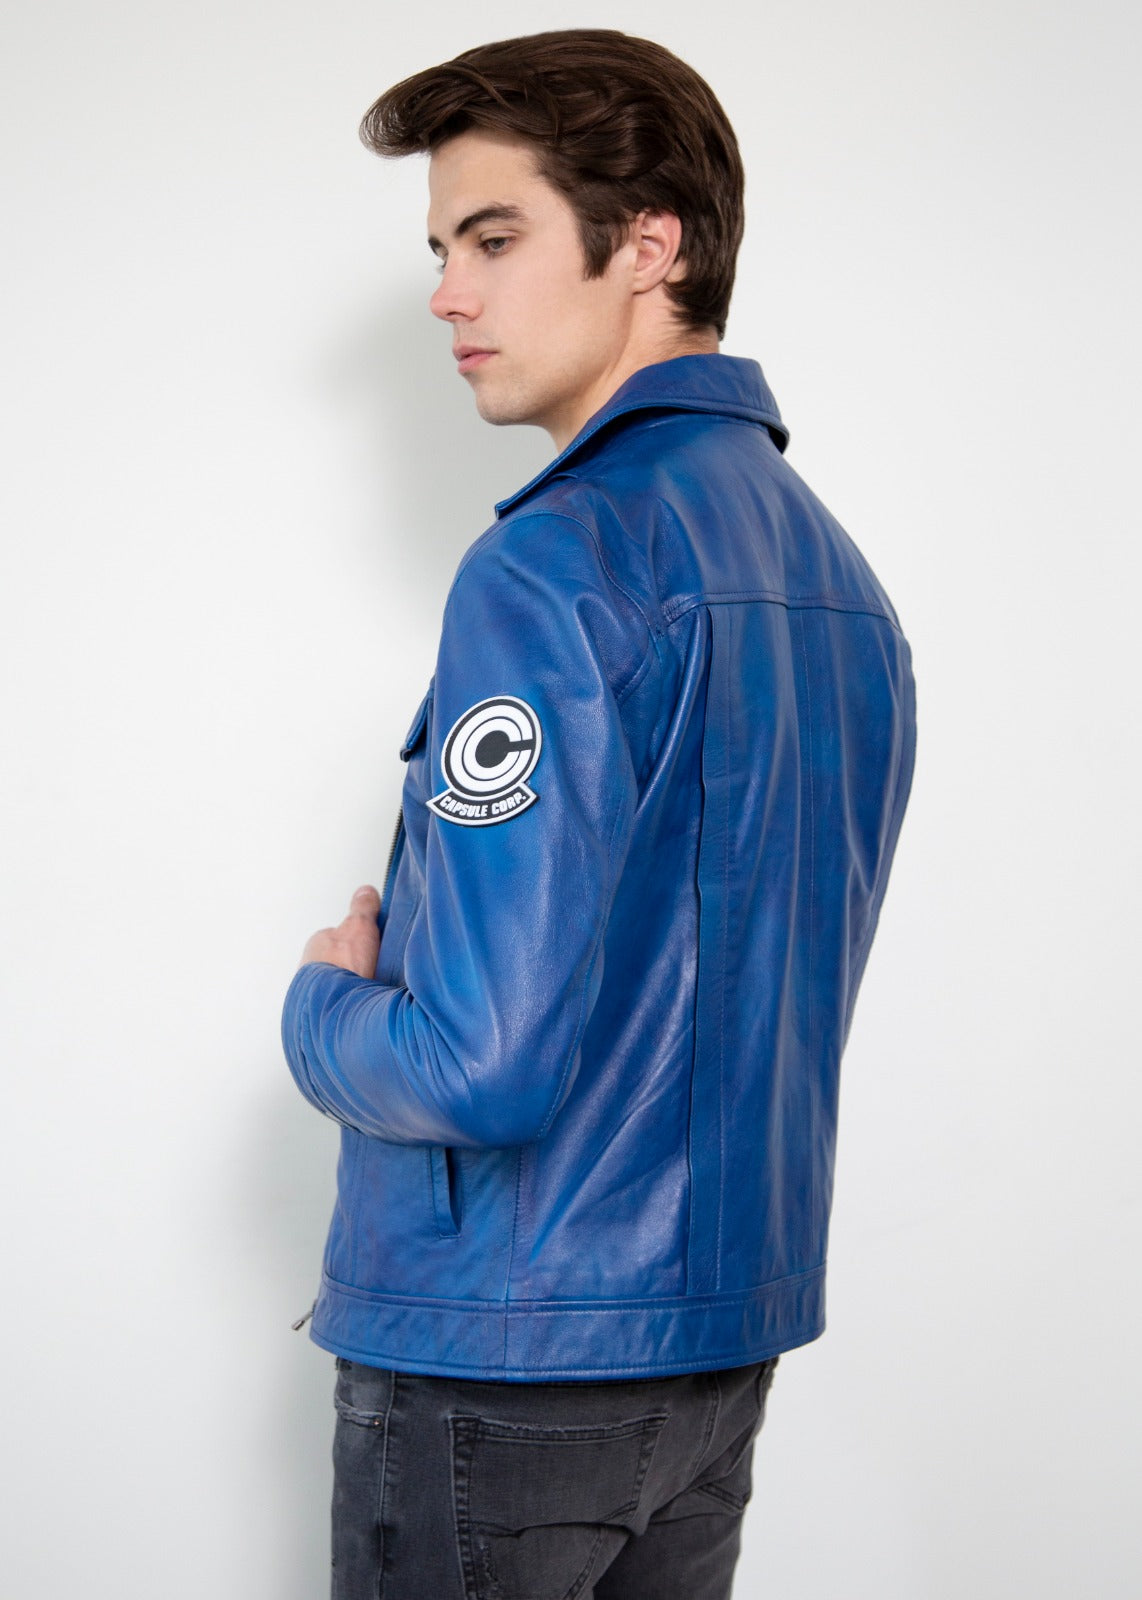 DBZ Future Trunks Leather Jacket Blue Back